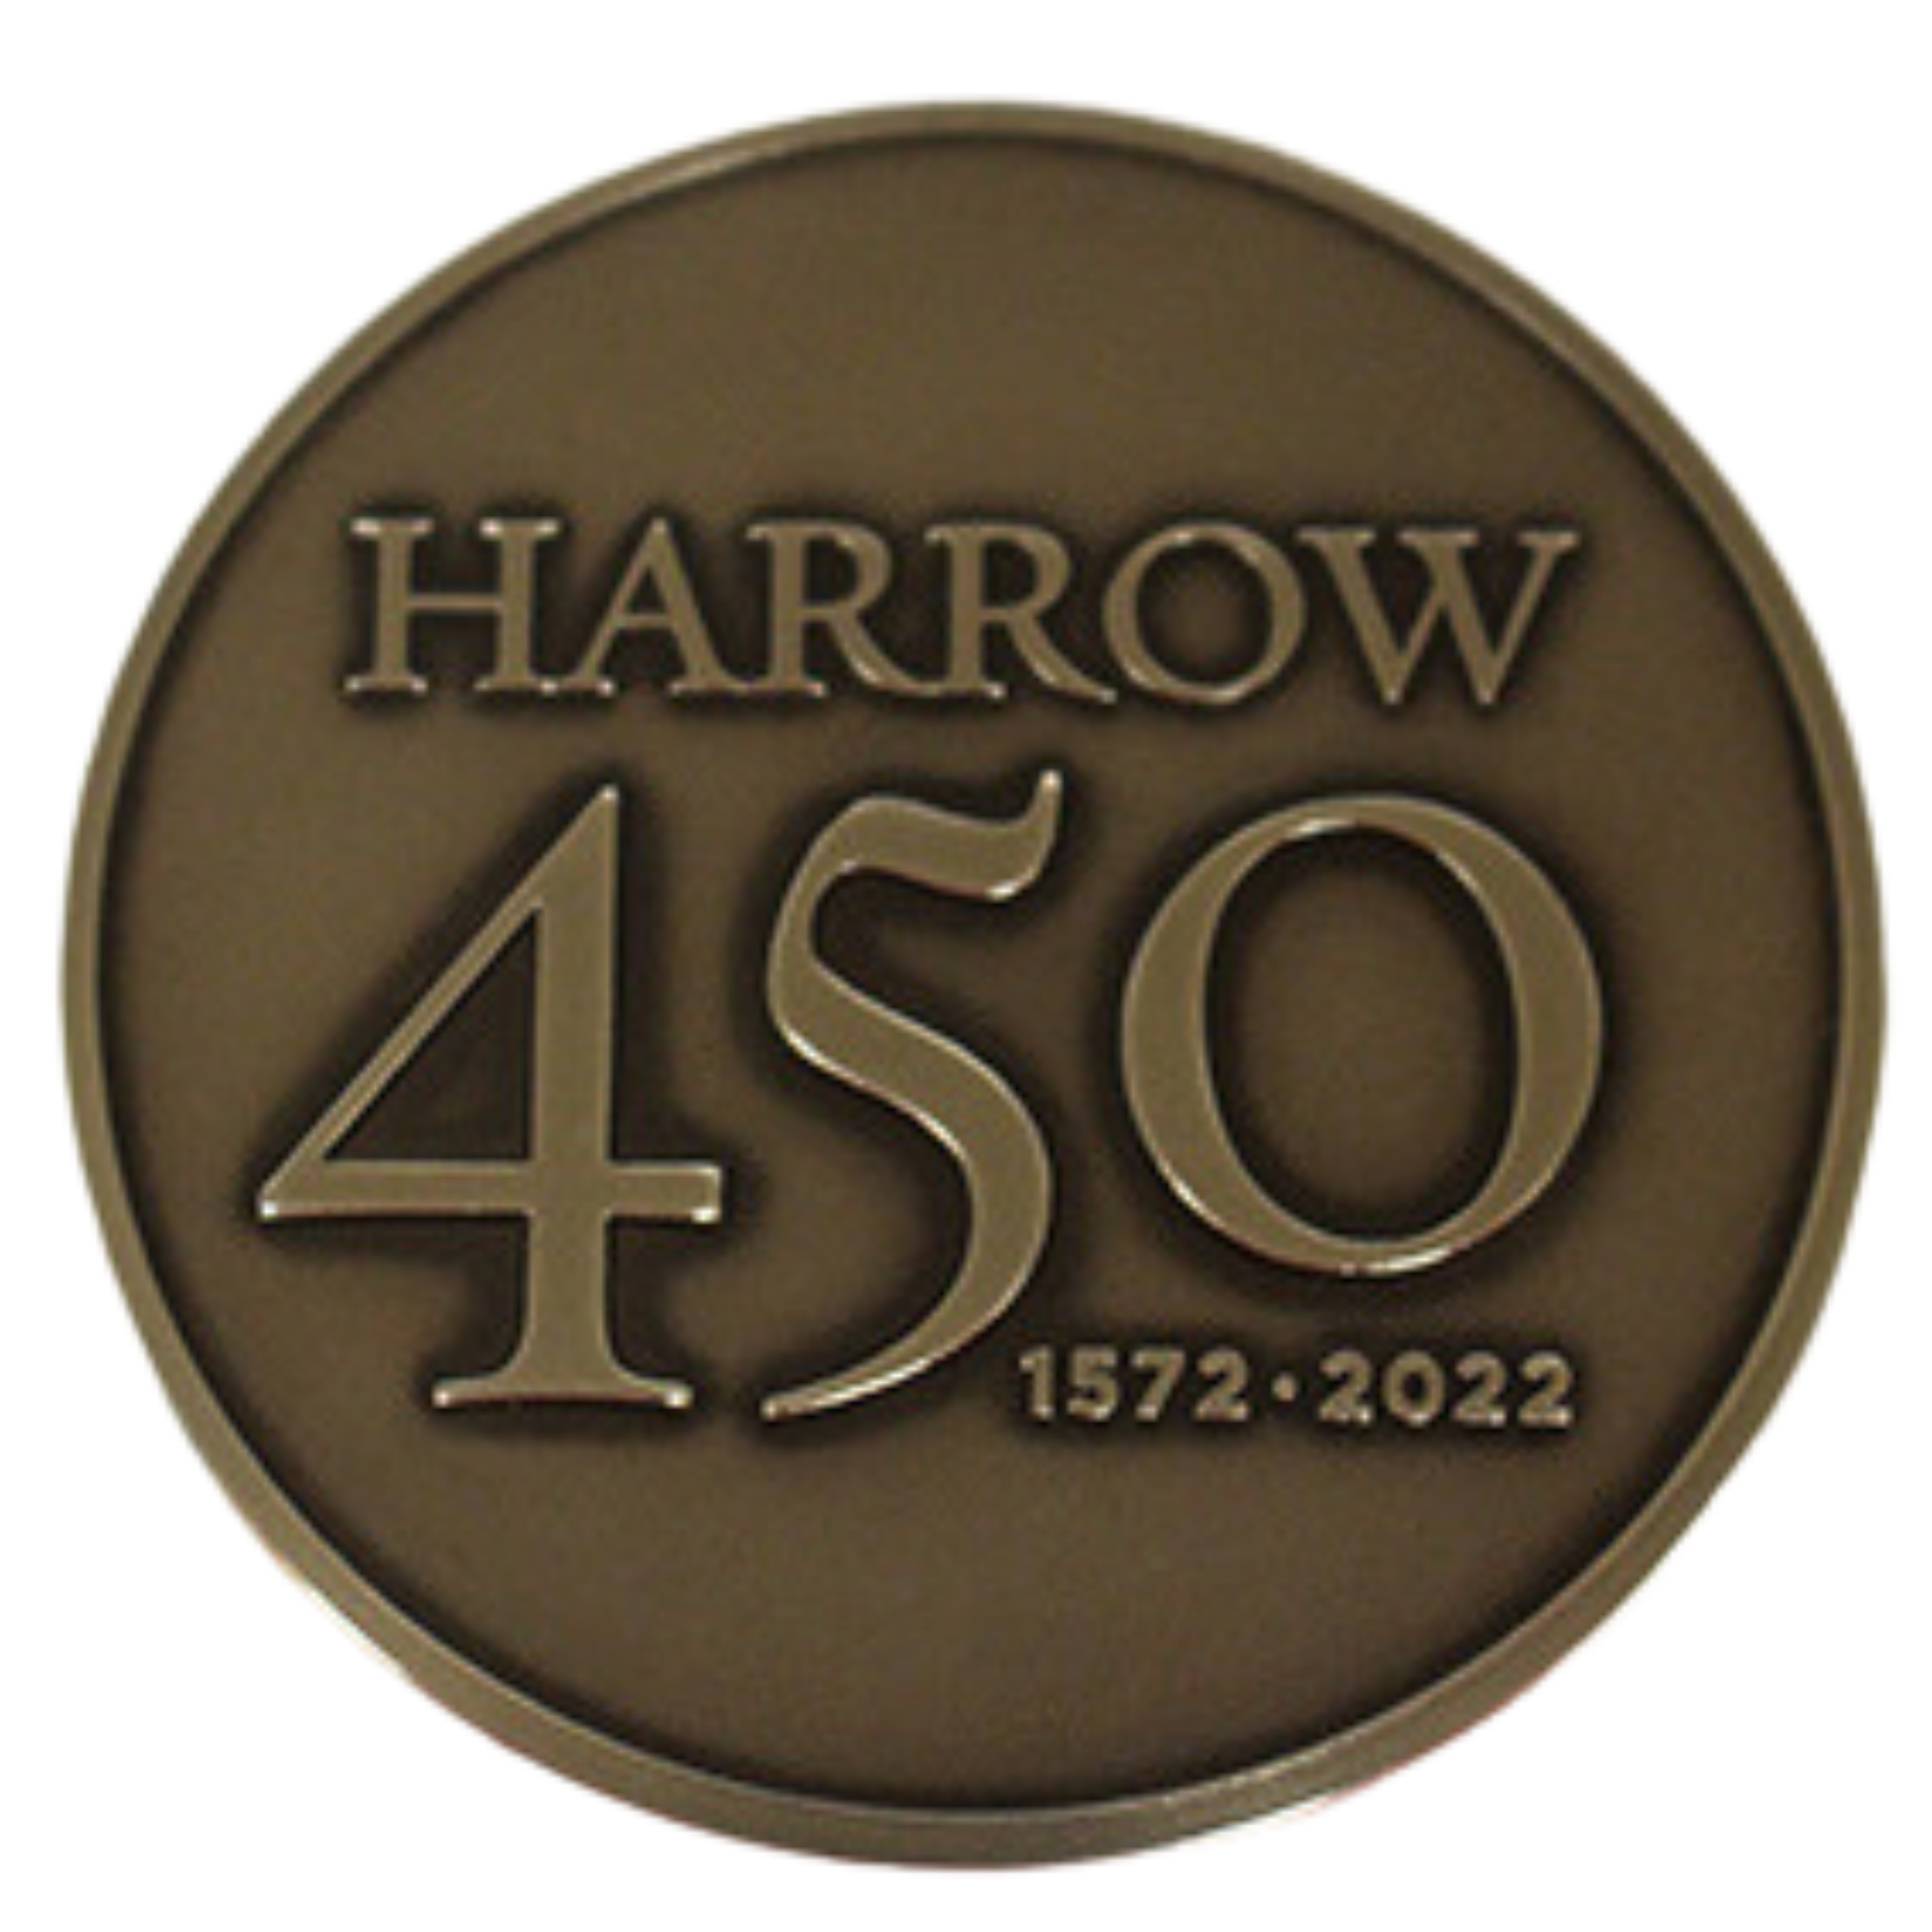 Harrow 450 - circular medal, featuring the words 'Harrow 450 1572-2022